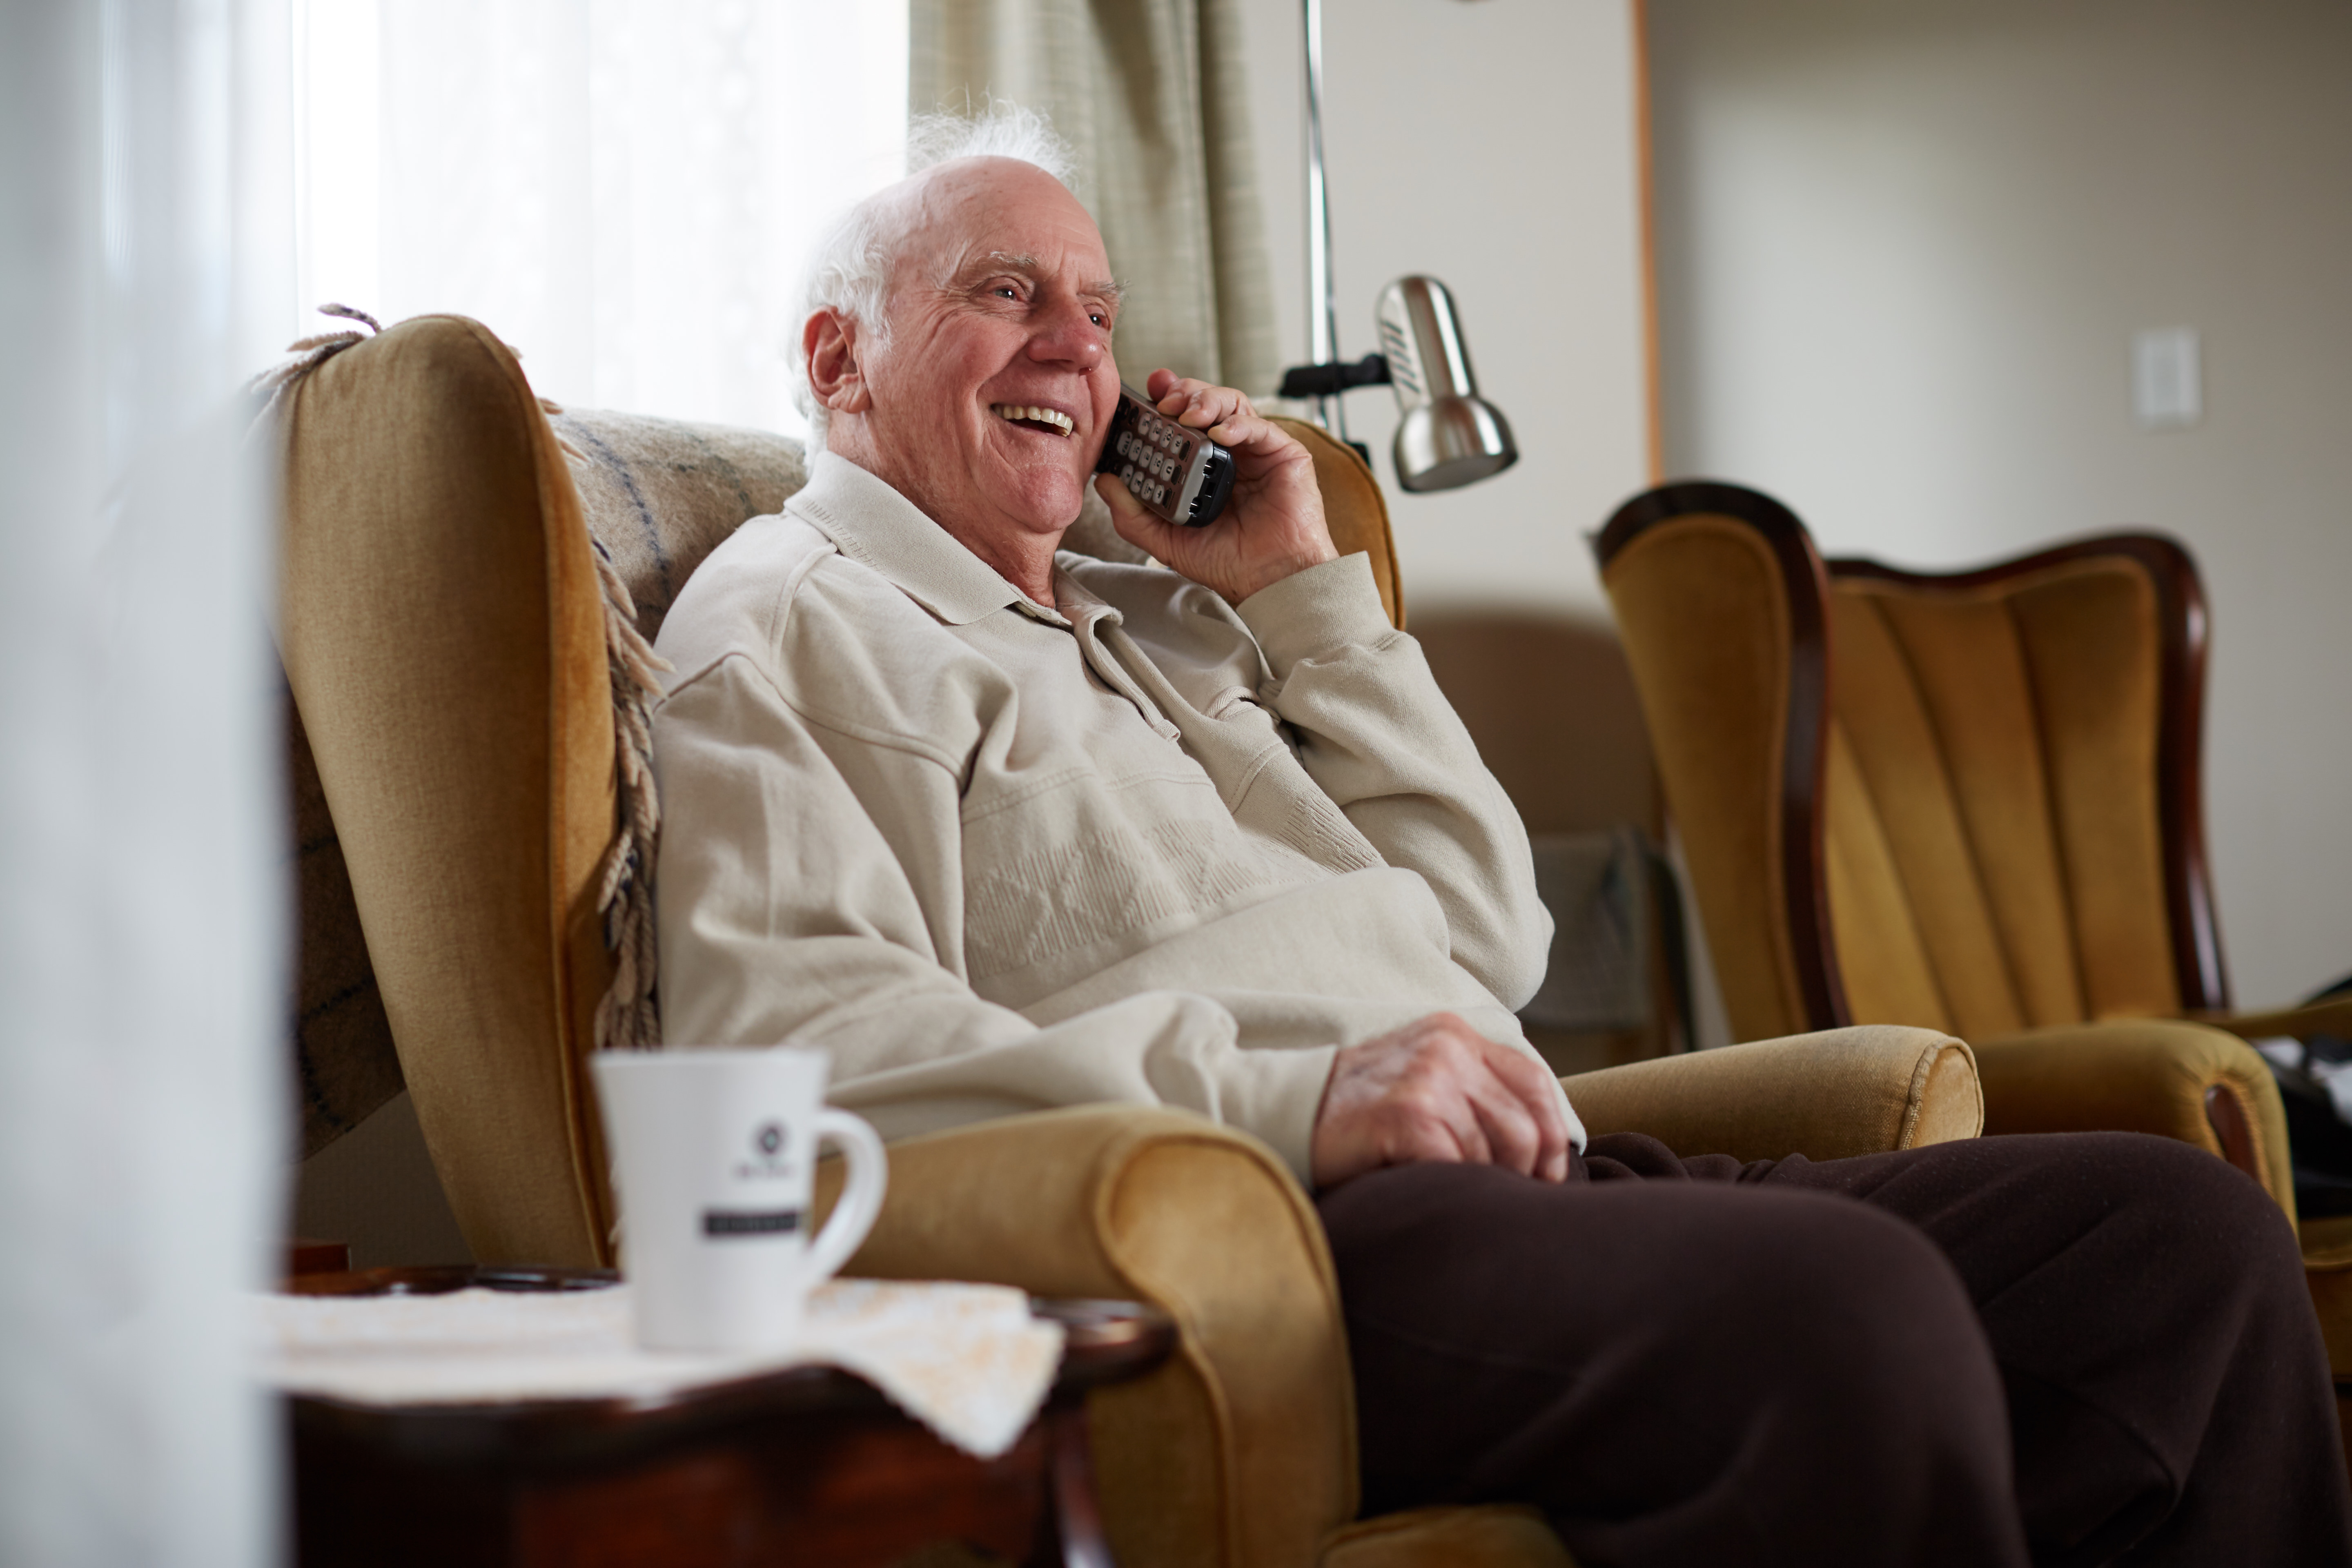 Elderly man talking on the phone